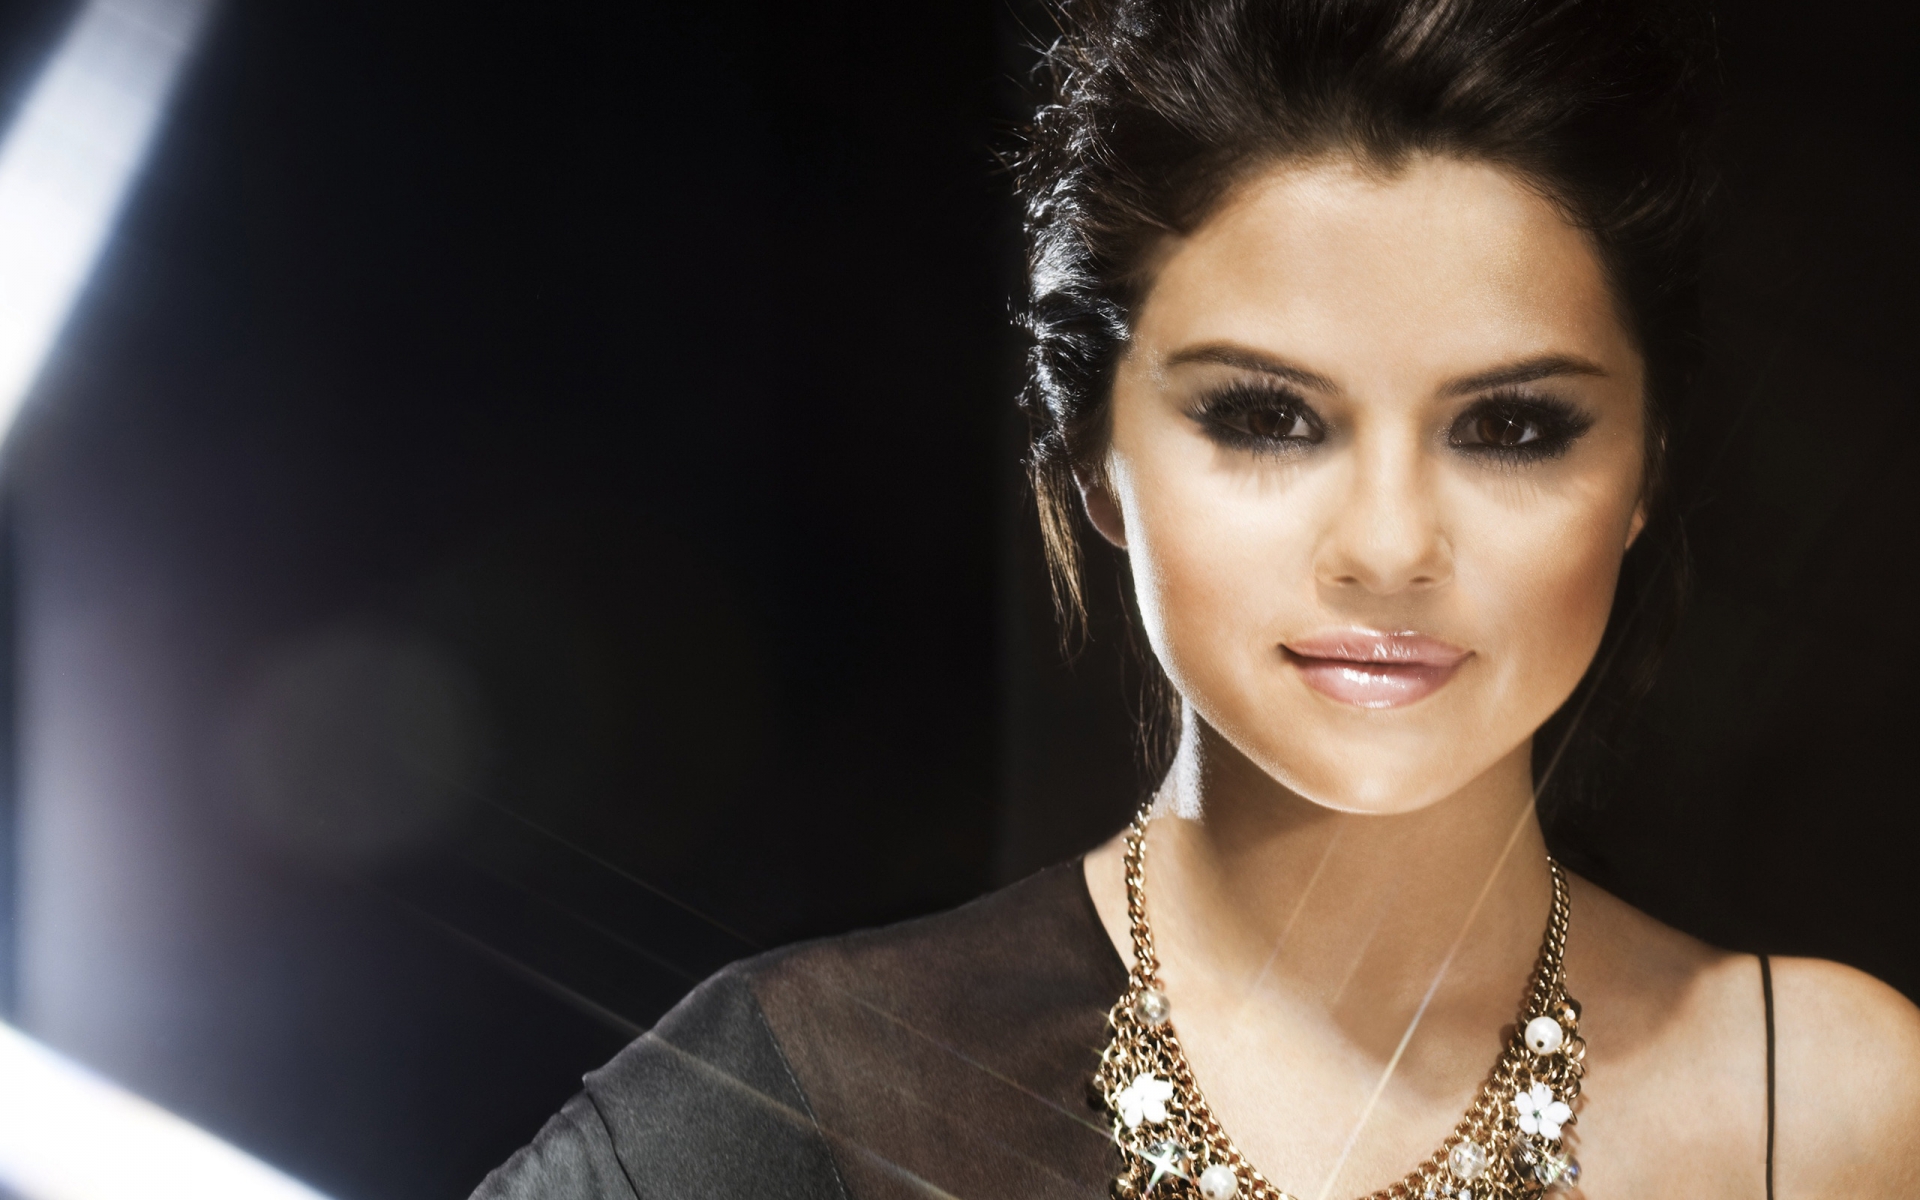 Beautiful Selena Gomez for 1920 x 1200 widescreen resolution